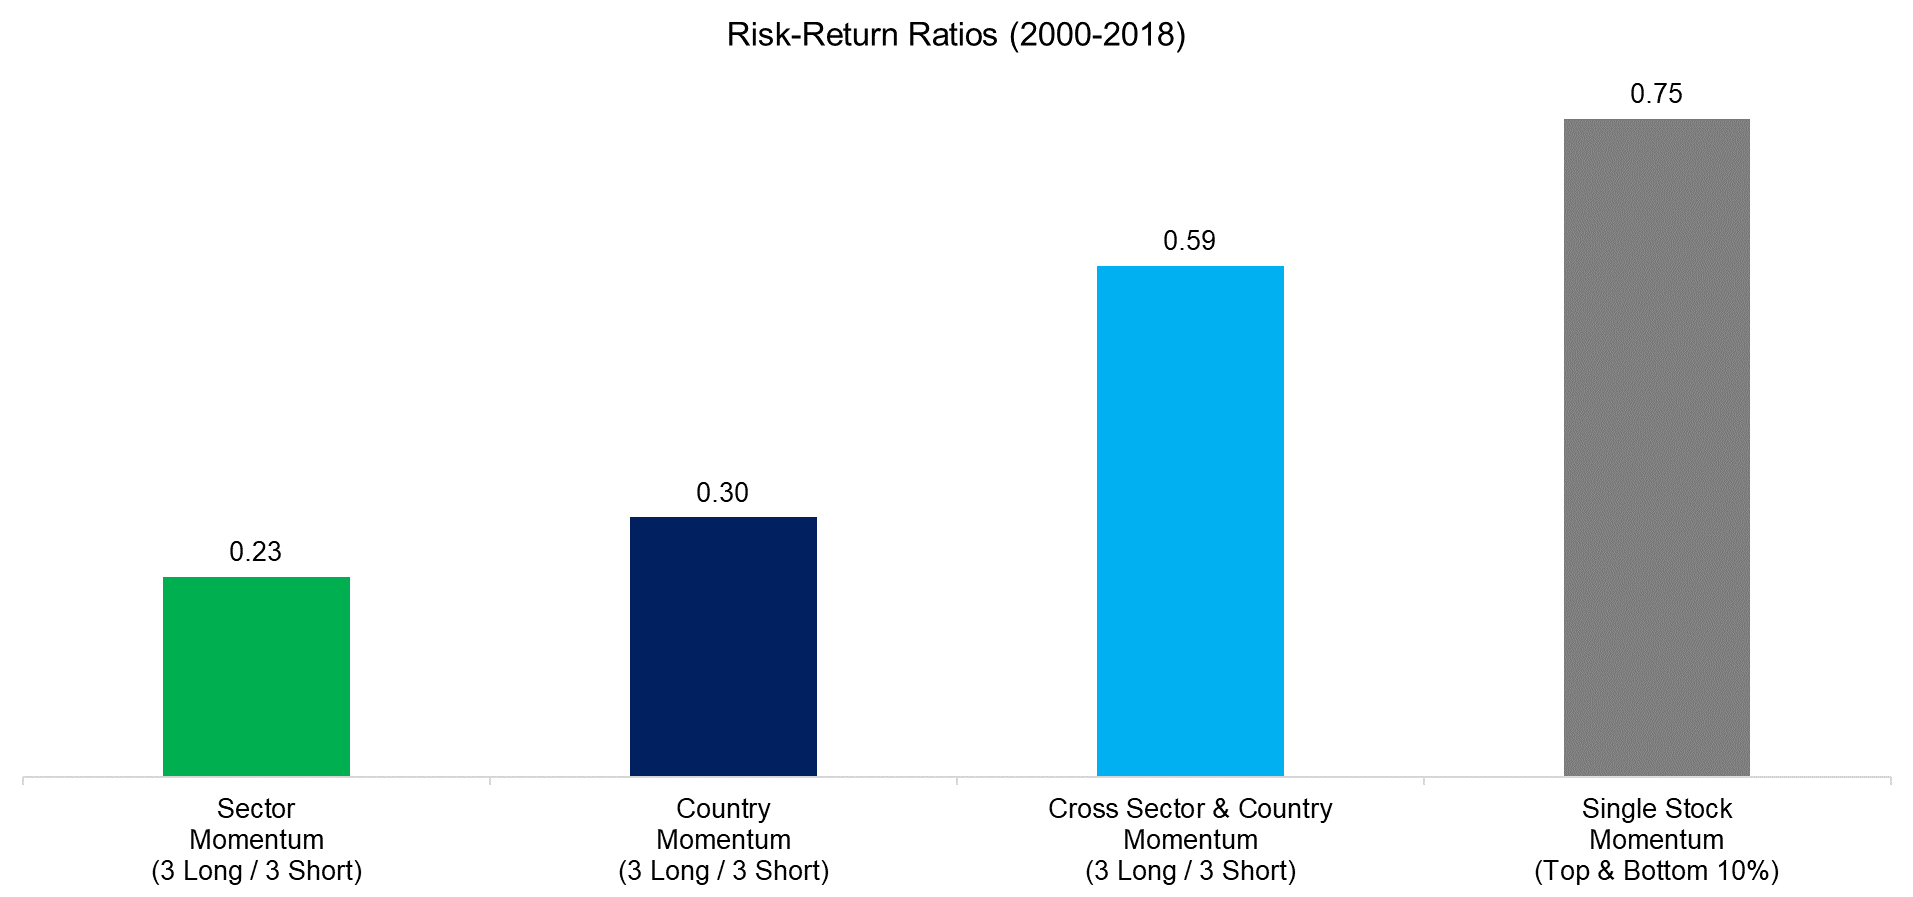 Momentum Risk-Return Ratios (2000-2018)